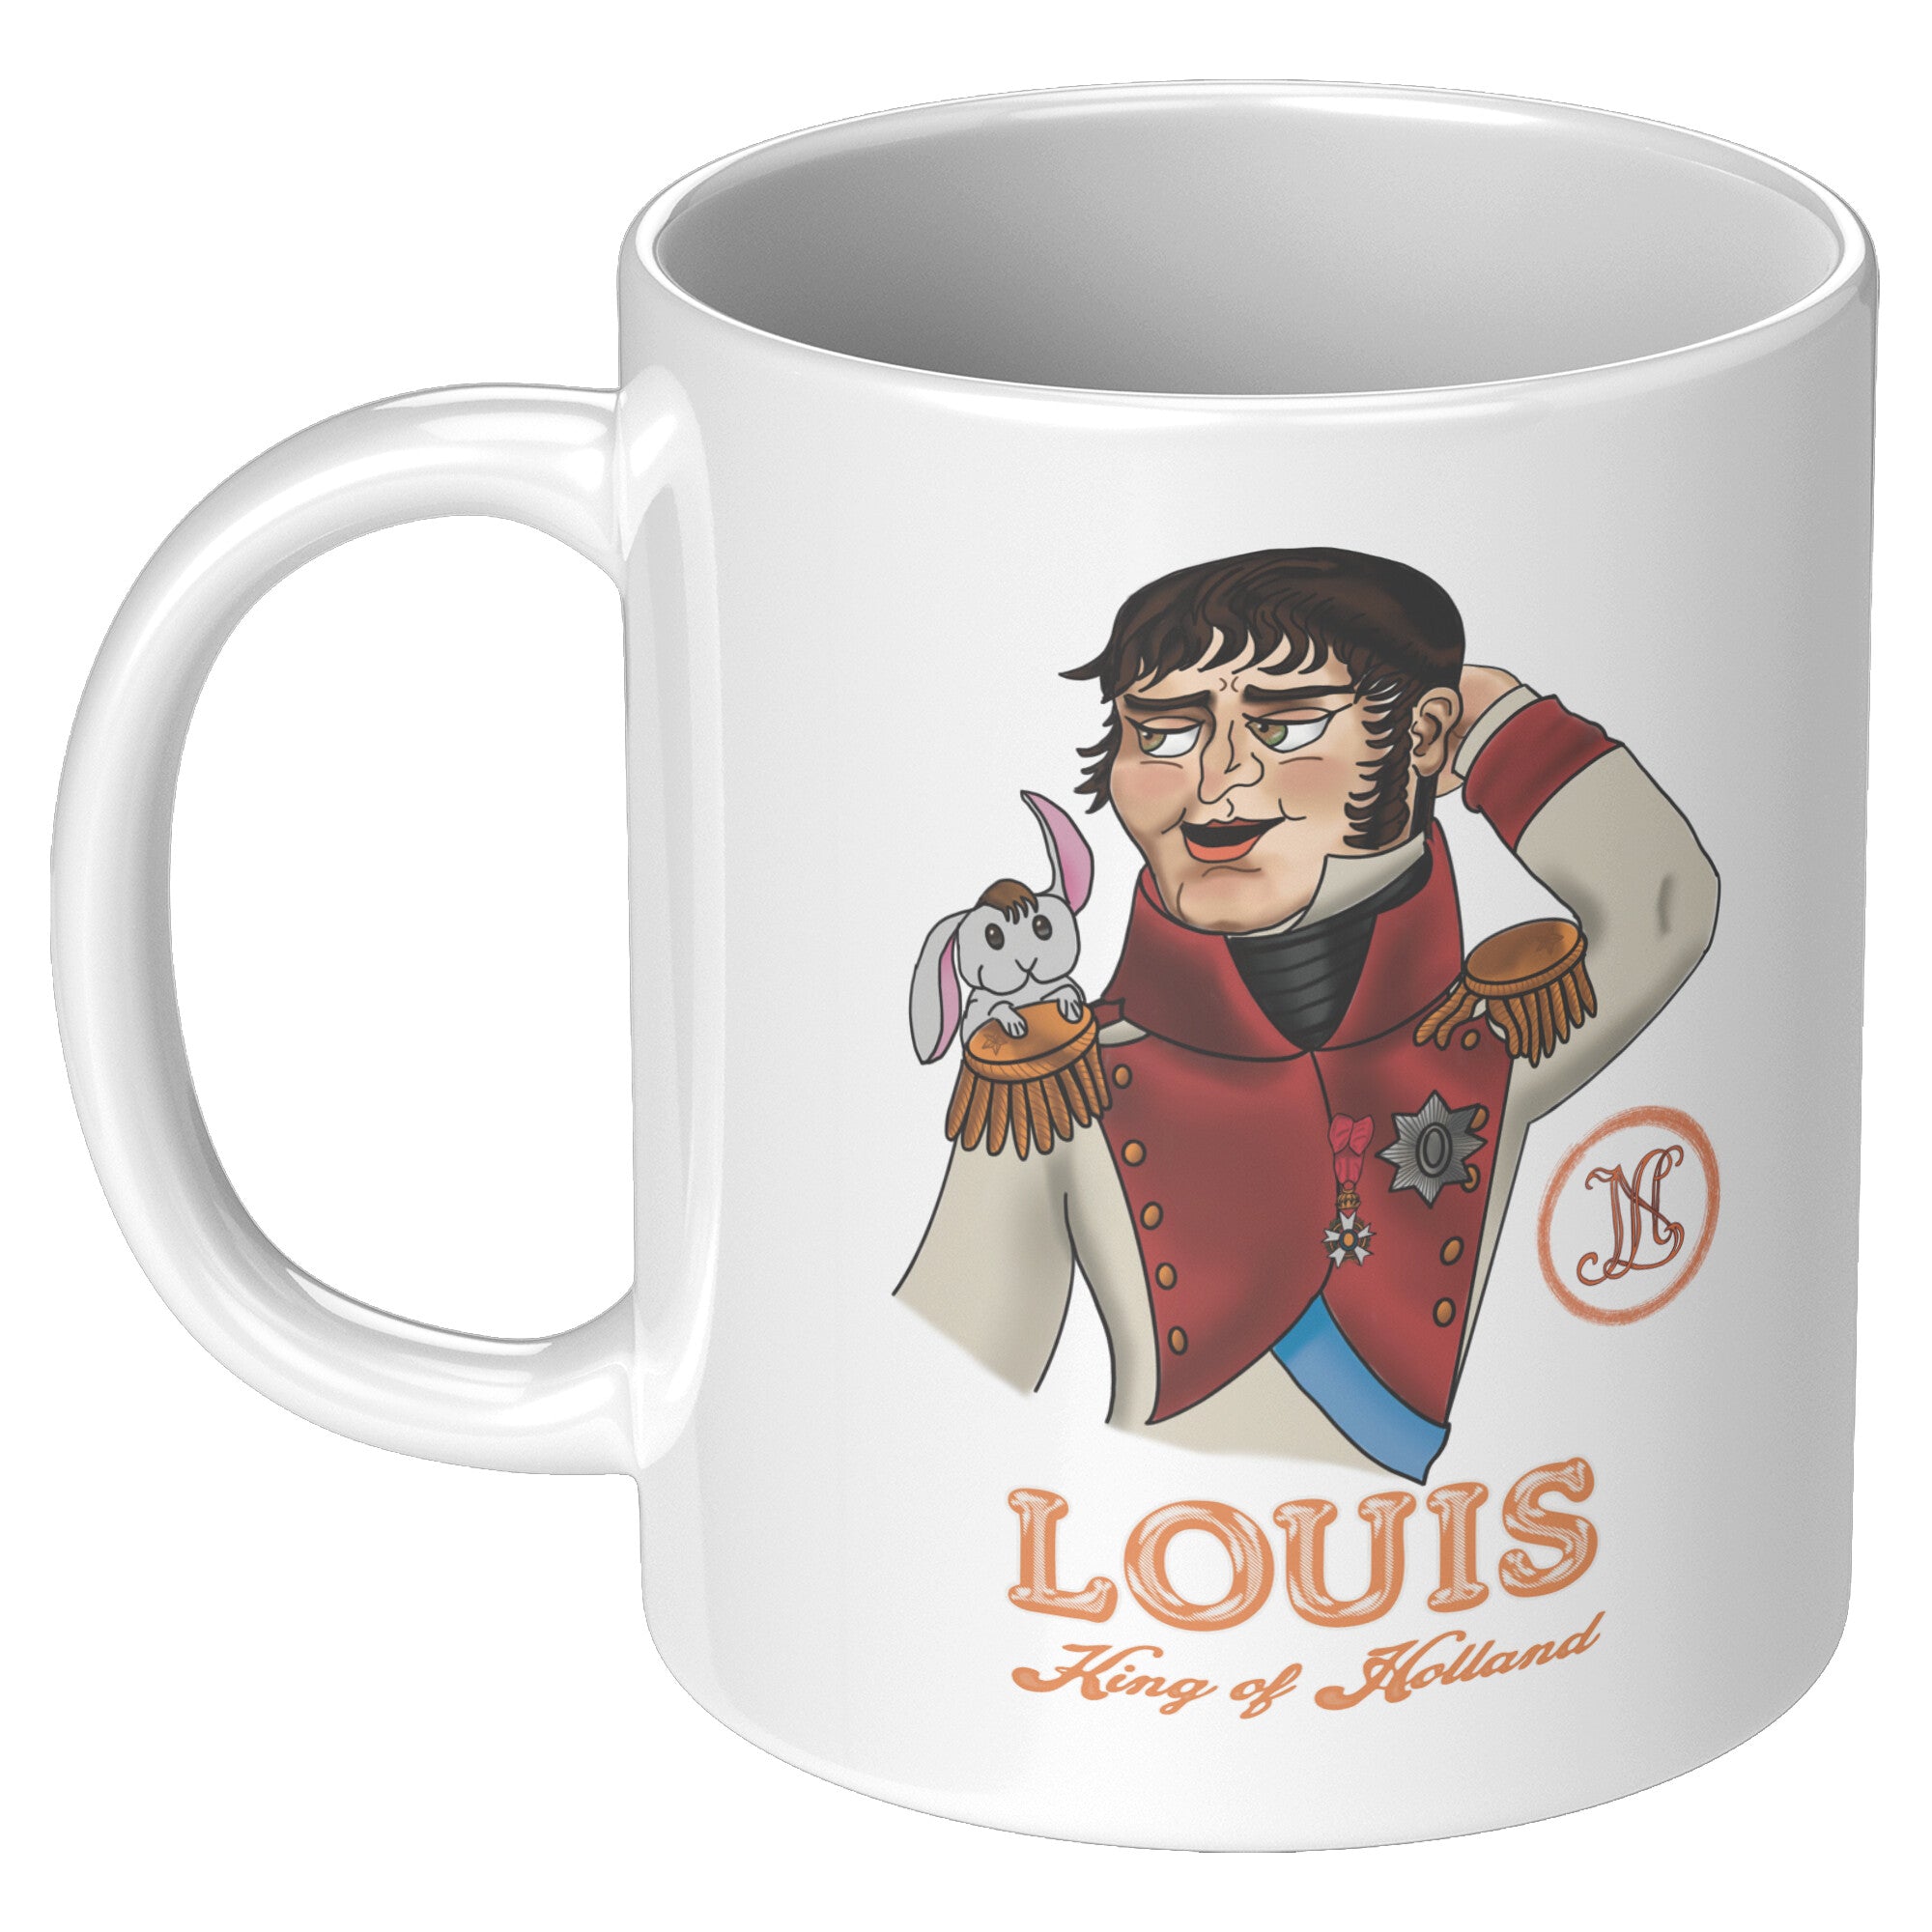 Louis Bonaparte King of Holland Cartoon Mug